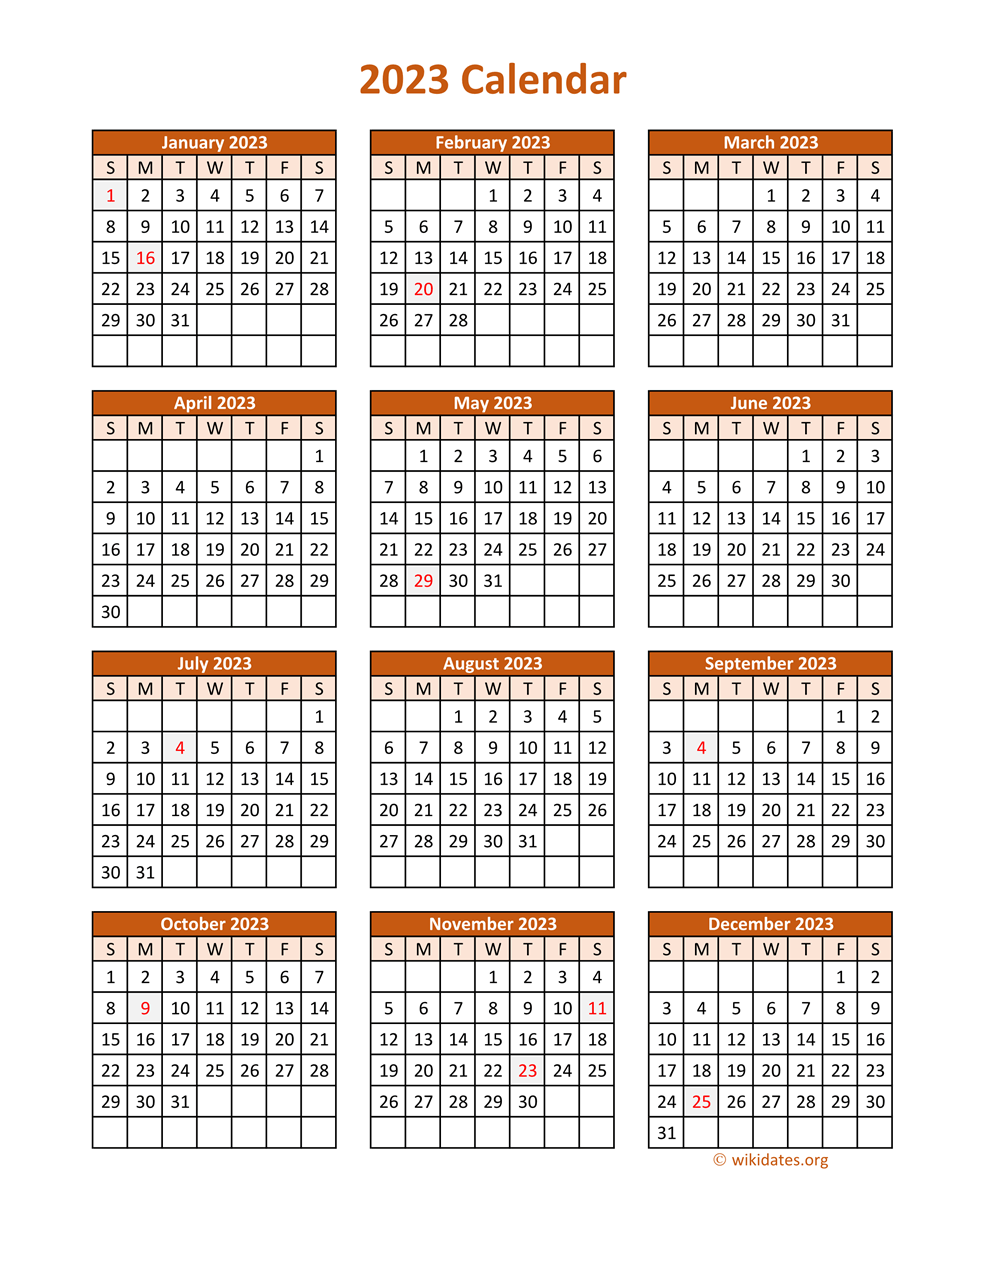 Cmu 2022 2023 Calendar Full Year 2023 Calendar On One Page | Wikidates.org